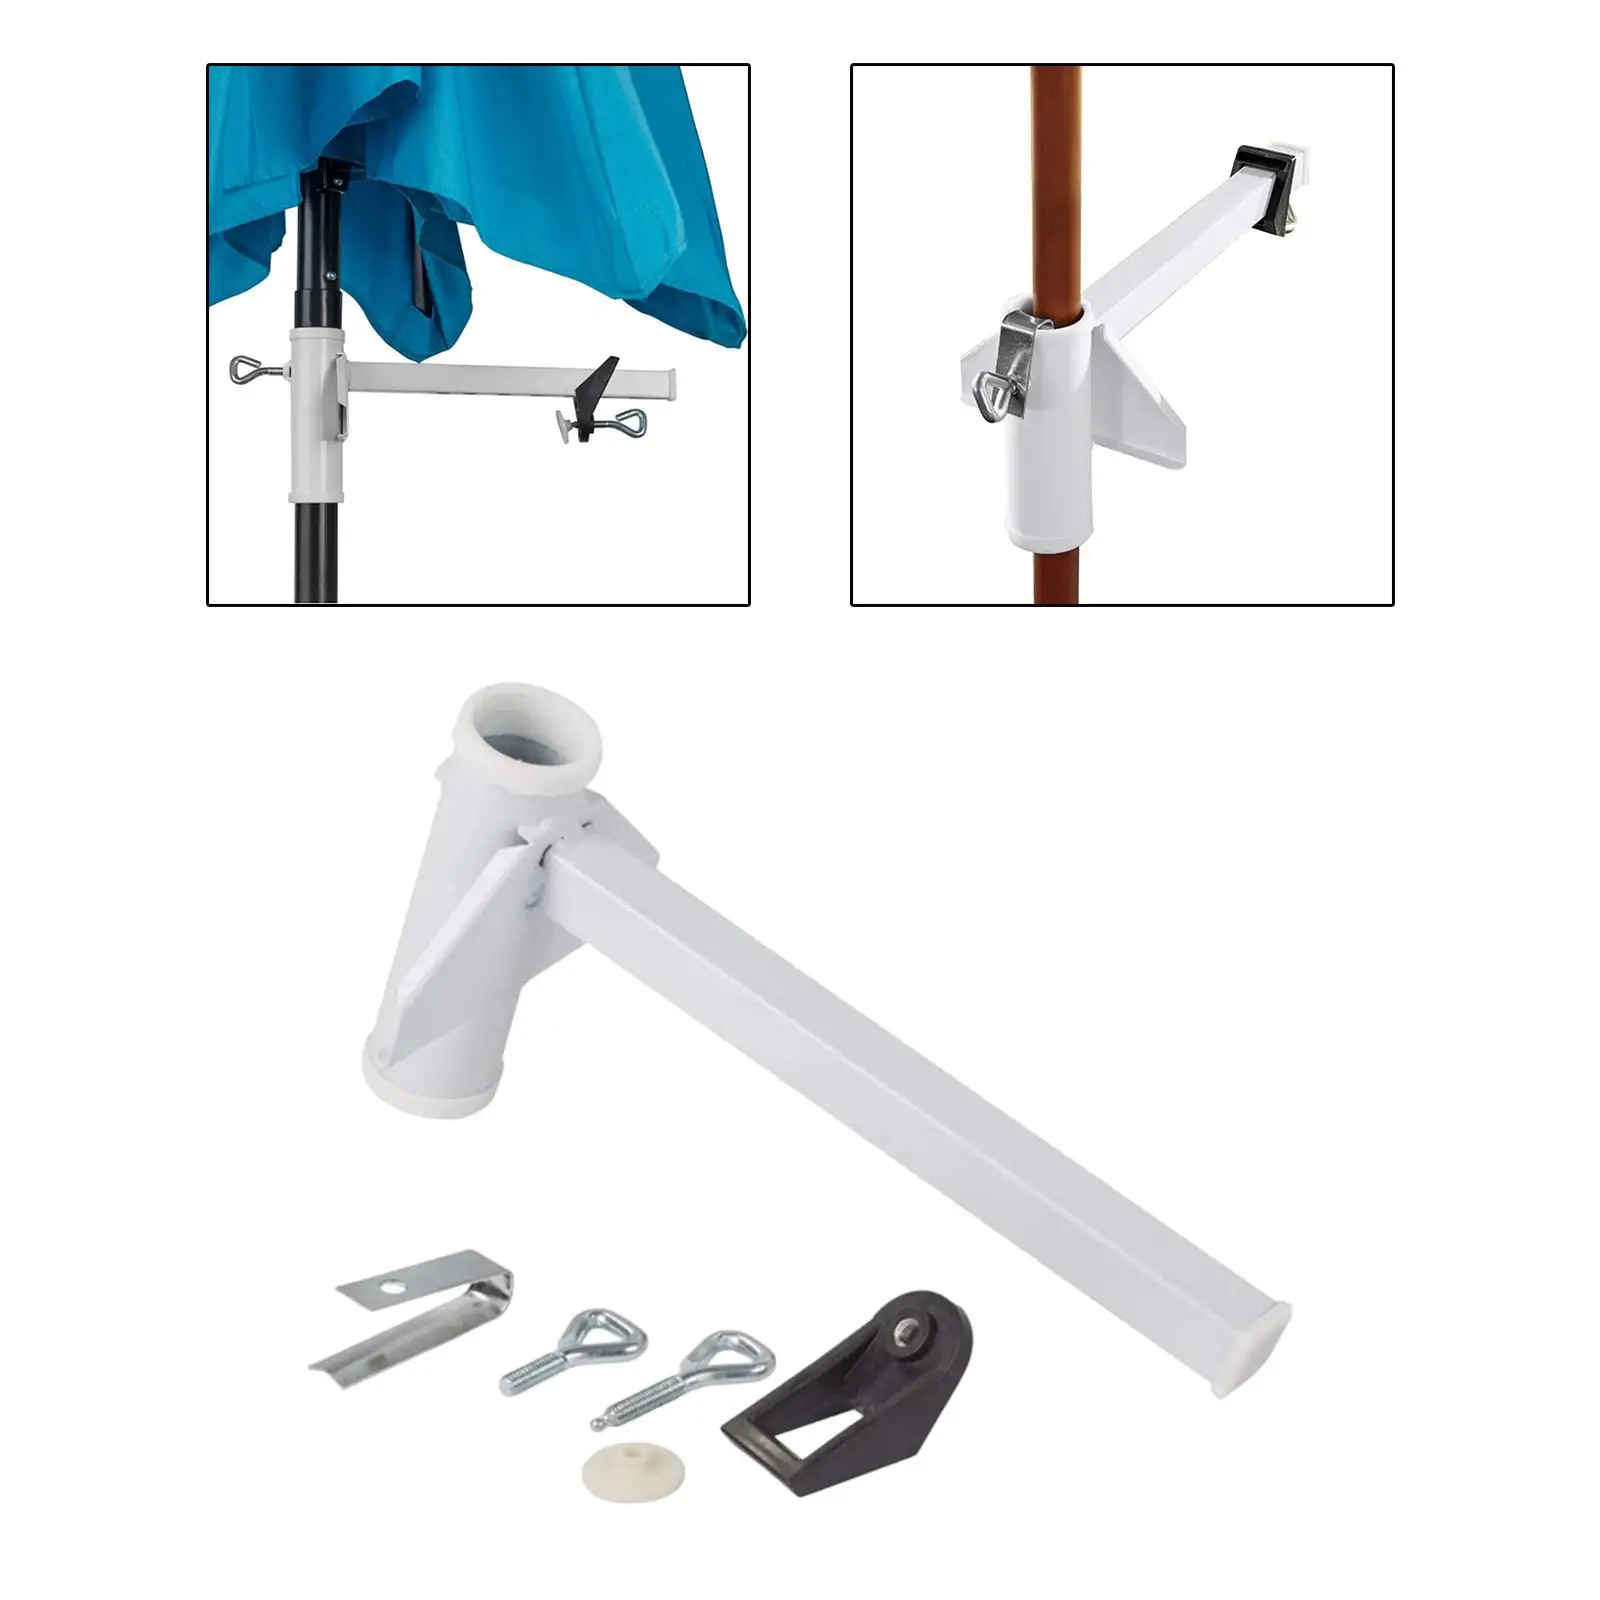 Parasol Holder Adjustable Umbrella Clamp Patio Umbrella Holder Mounting Bracket for Pool Deck Railing Outdoor Courtyard Boats